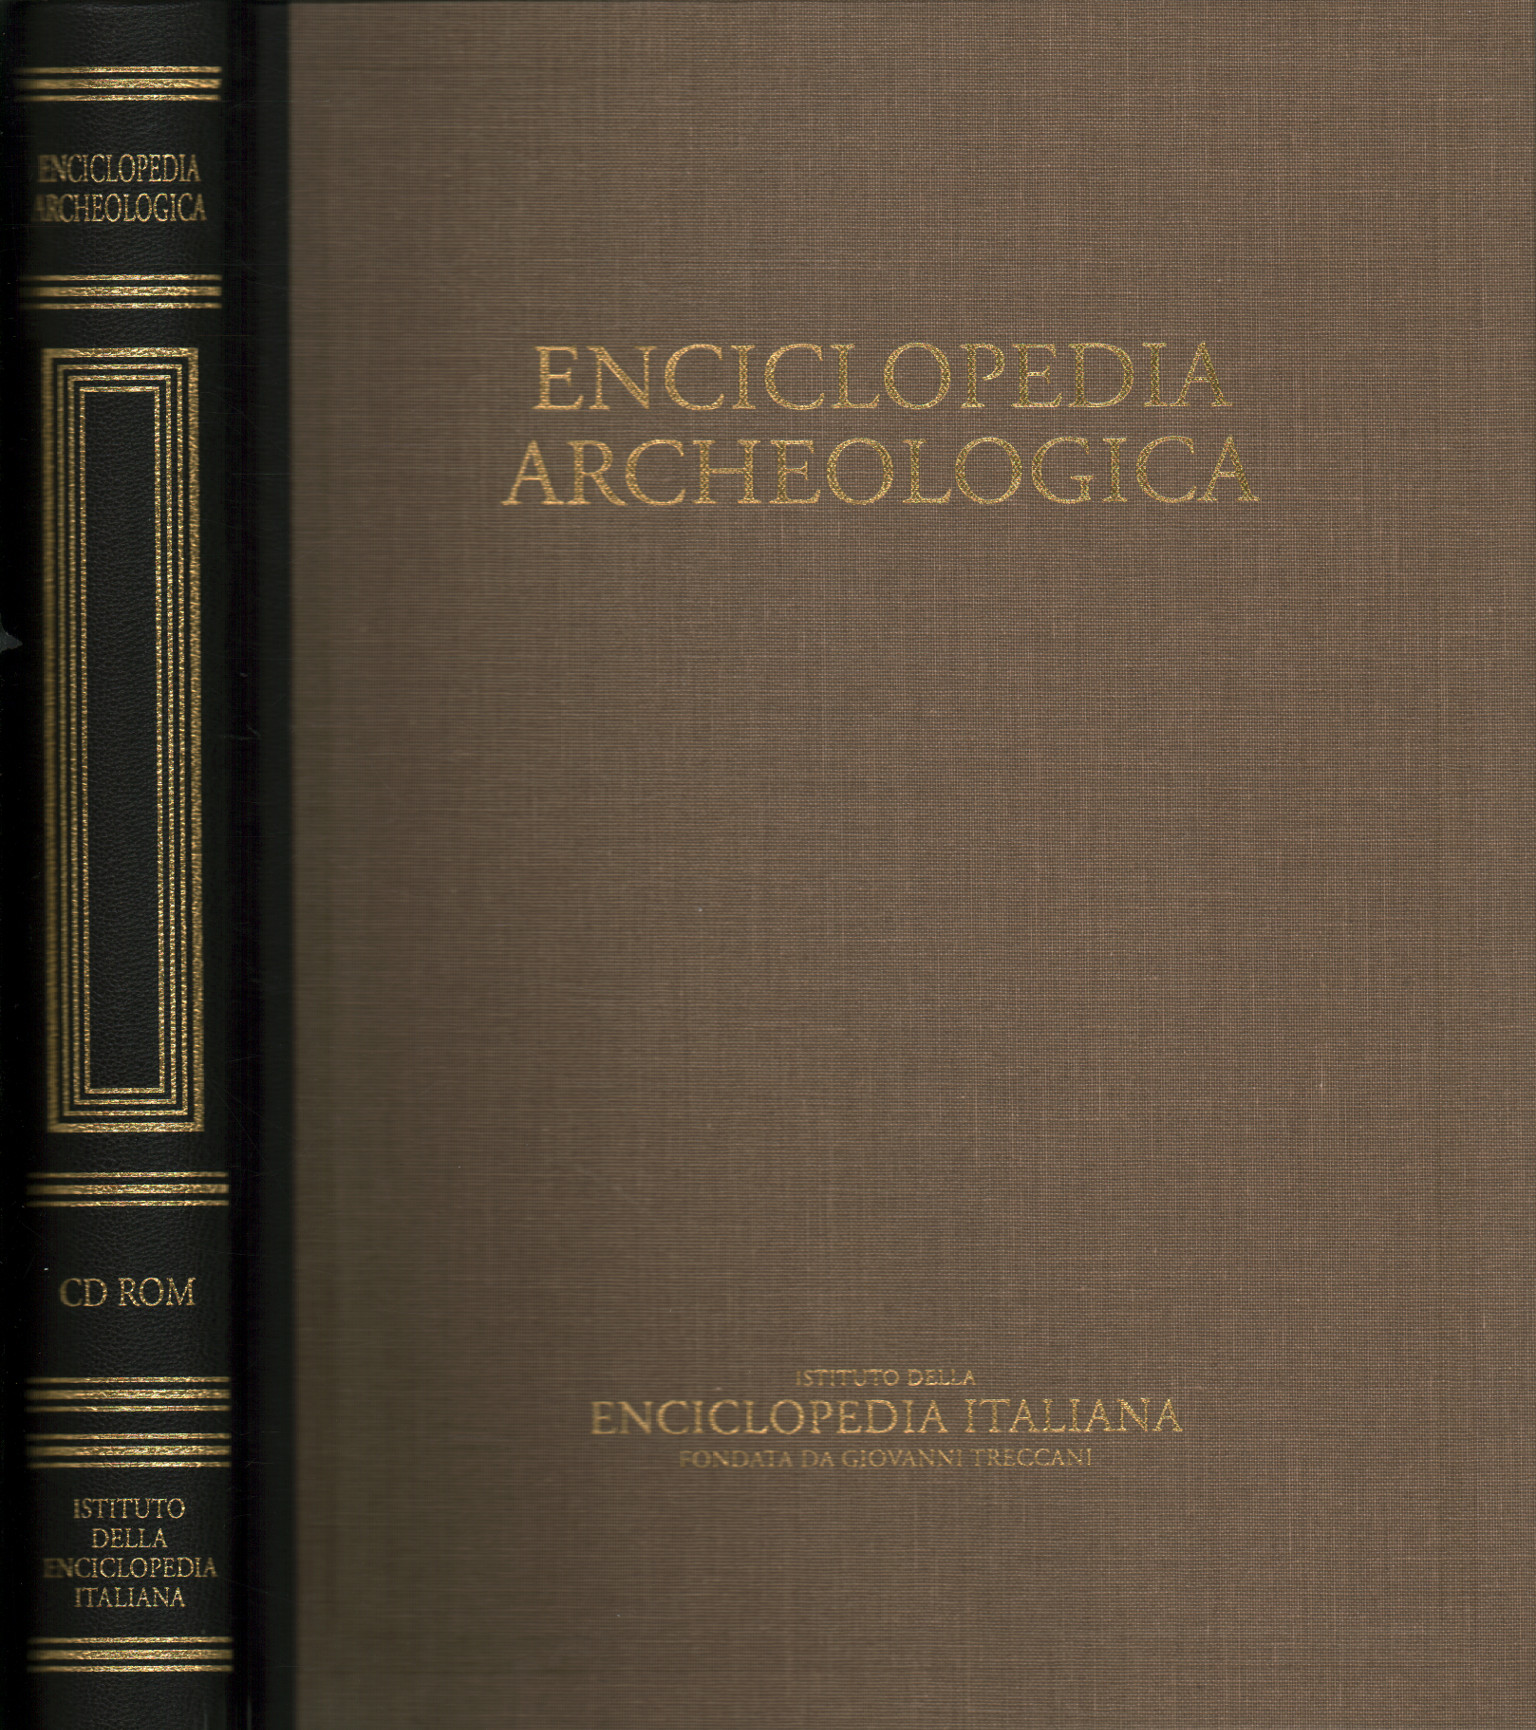 CD-Rom Archaeological encyclopedia. The world